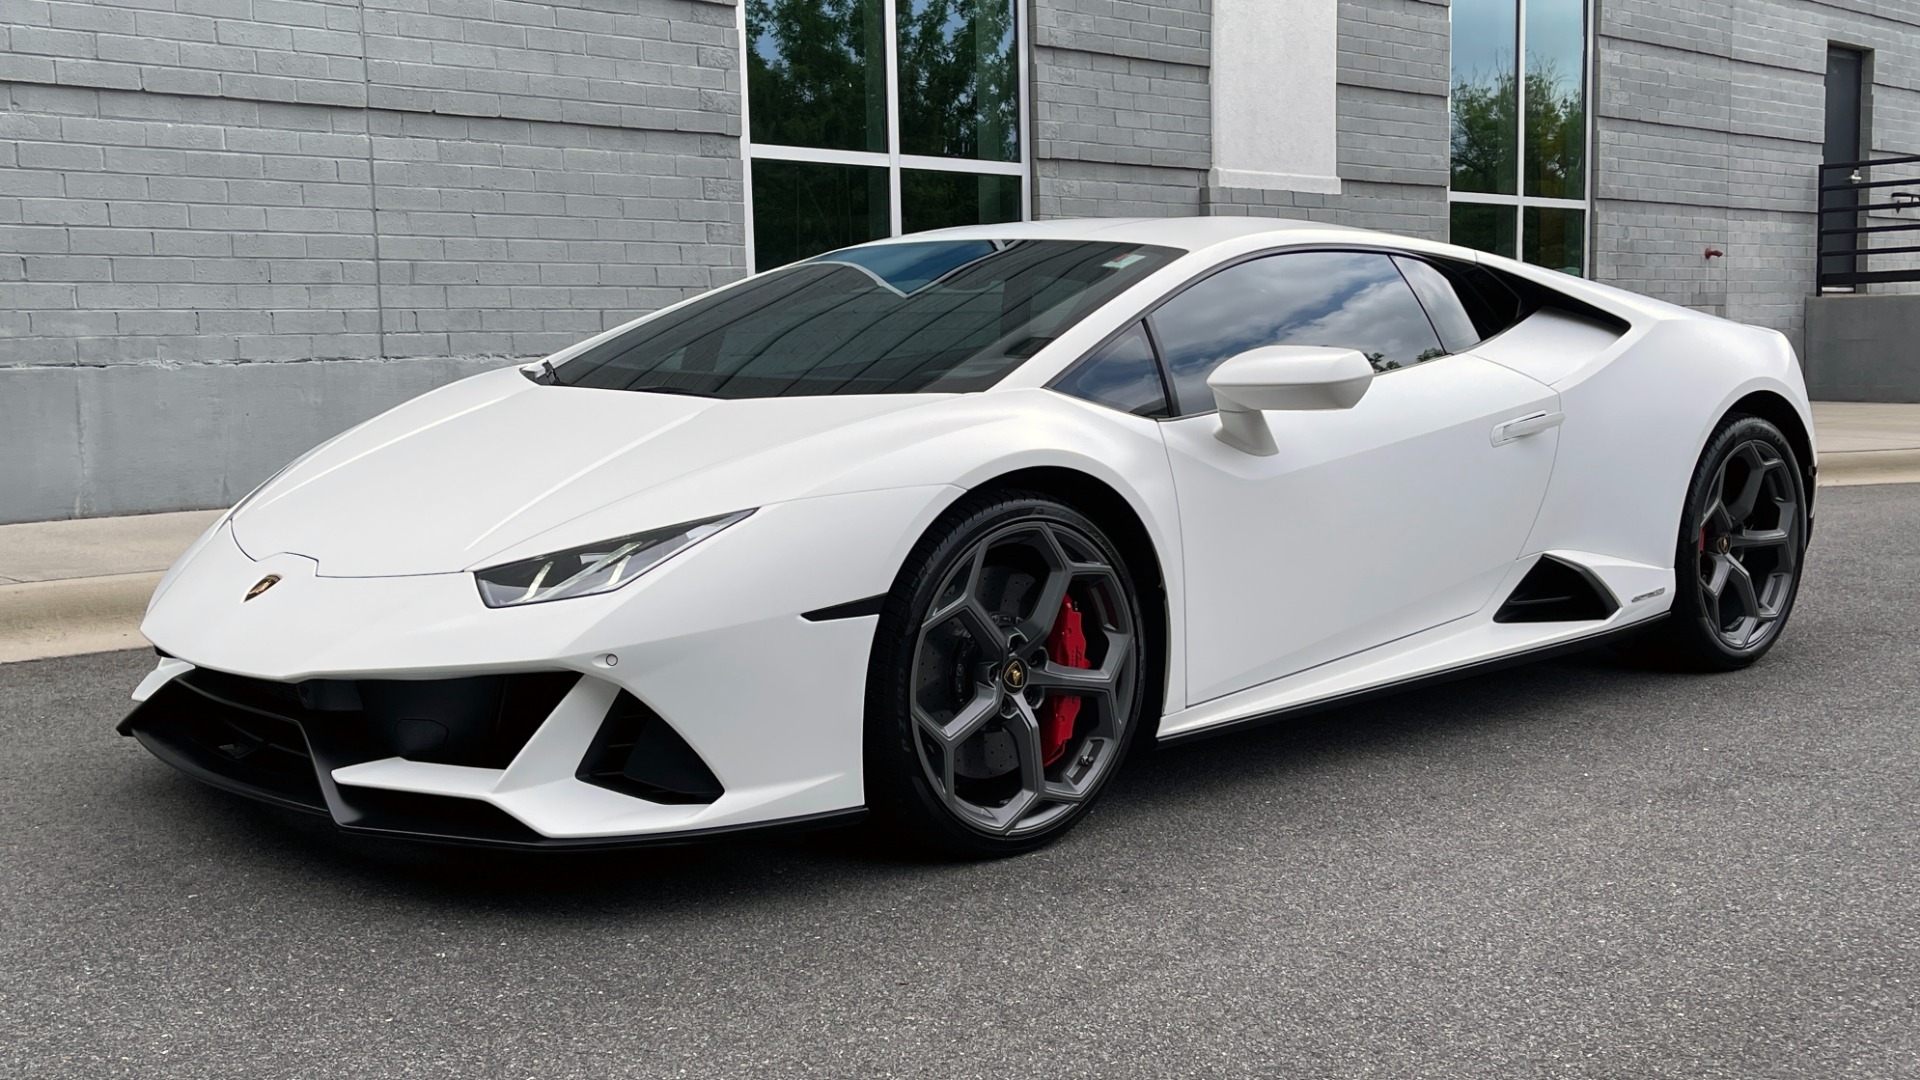 Used 2020 Lamborghini HURACAN EVO LP640-4 5.2L V10 630HP / 7-SPD AUTO / AWD / NAVIGATION / CAMERA for sale $325,000 at Formula Imports in Charlotte NC 28227 2